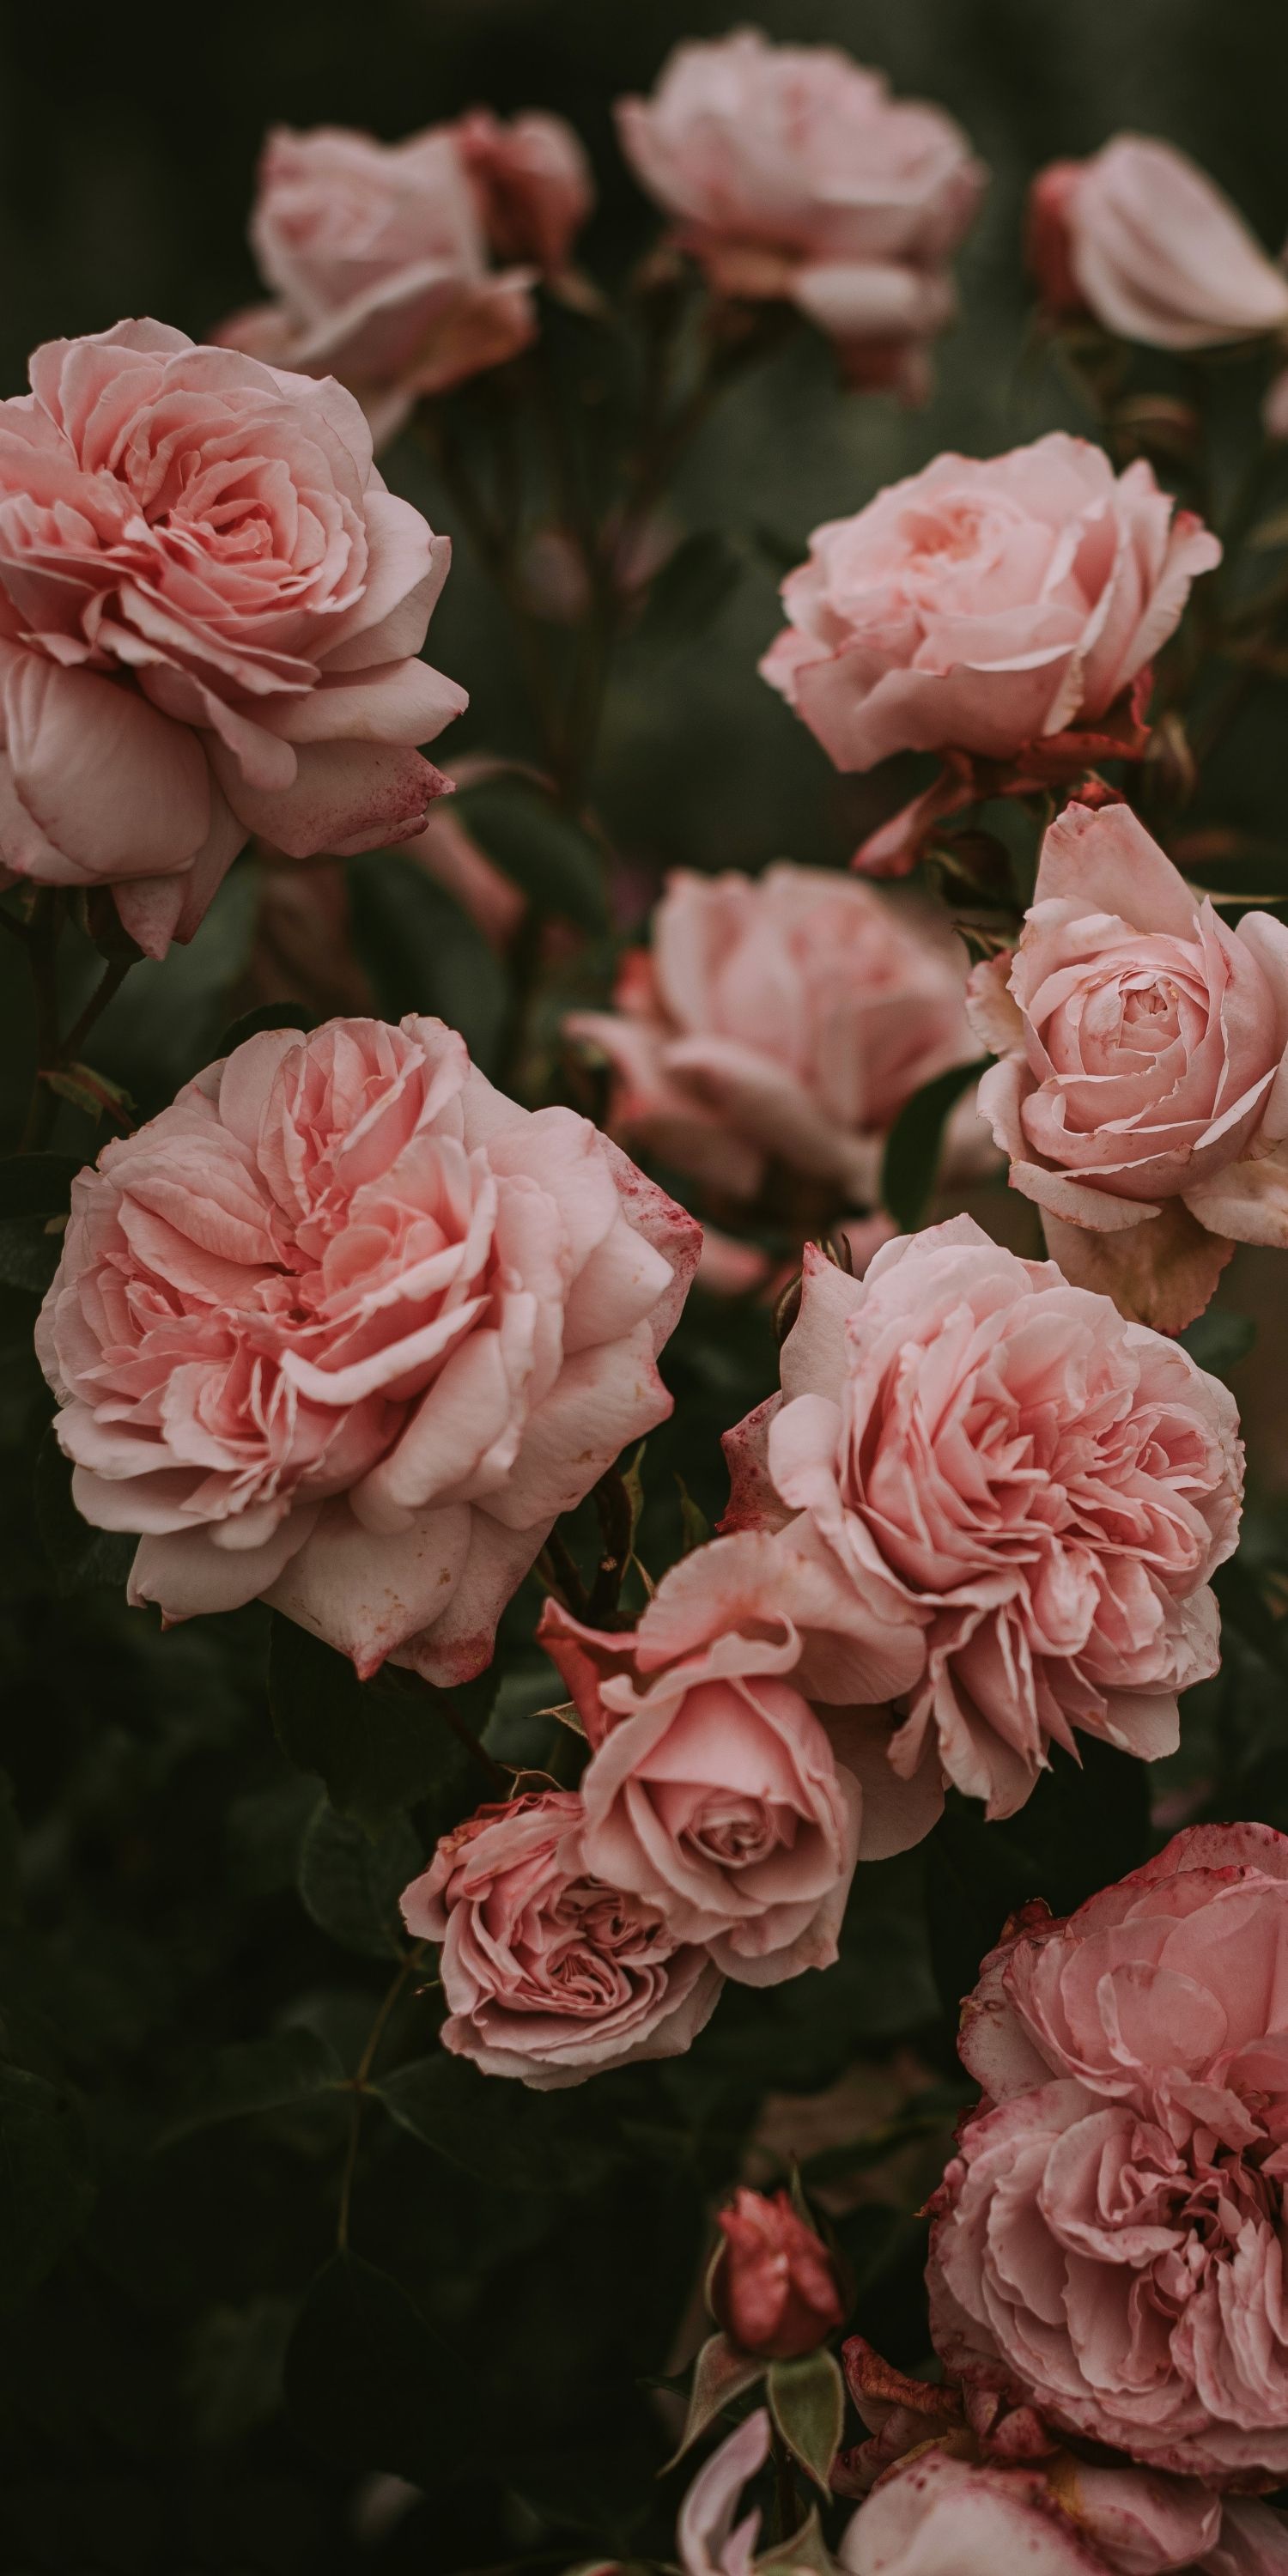 Wallpaper. Flower aesthetic, Pink flowers photography, Flower iphone wallpaper